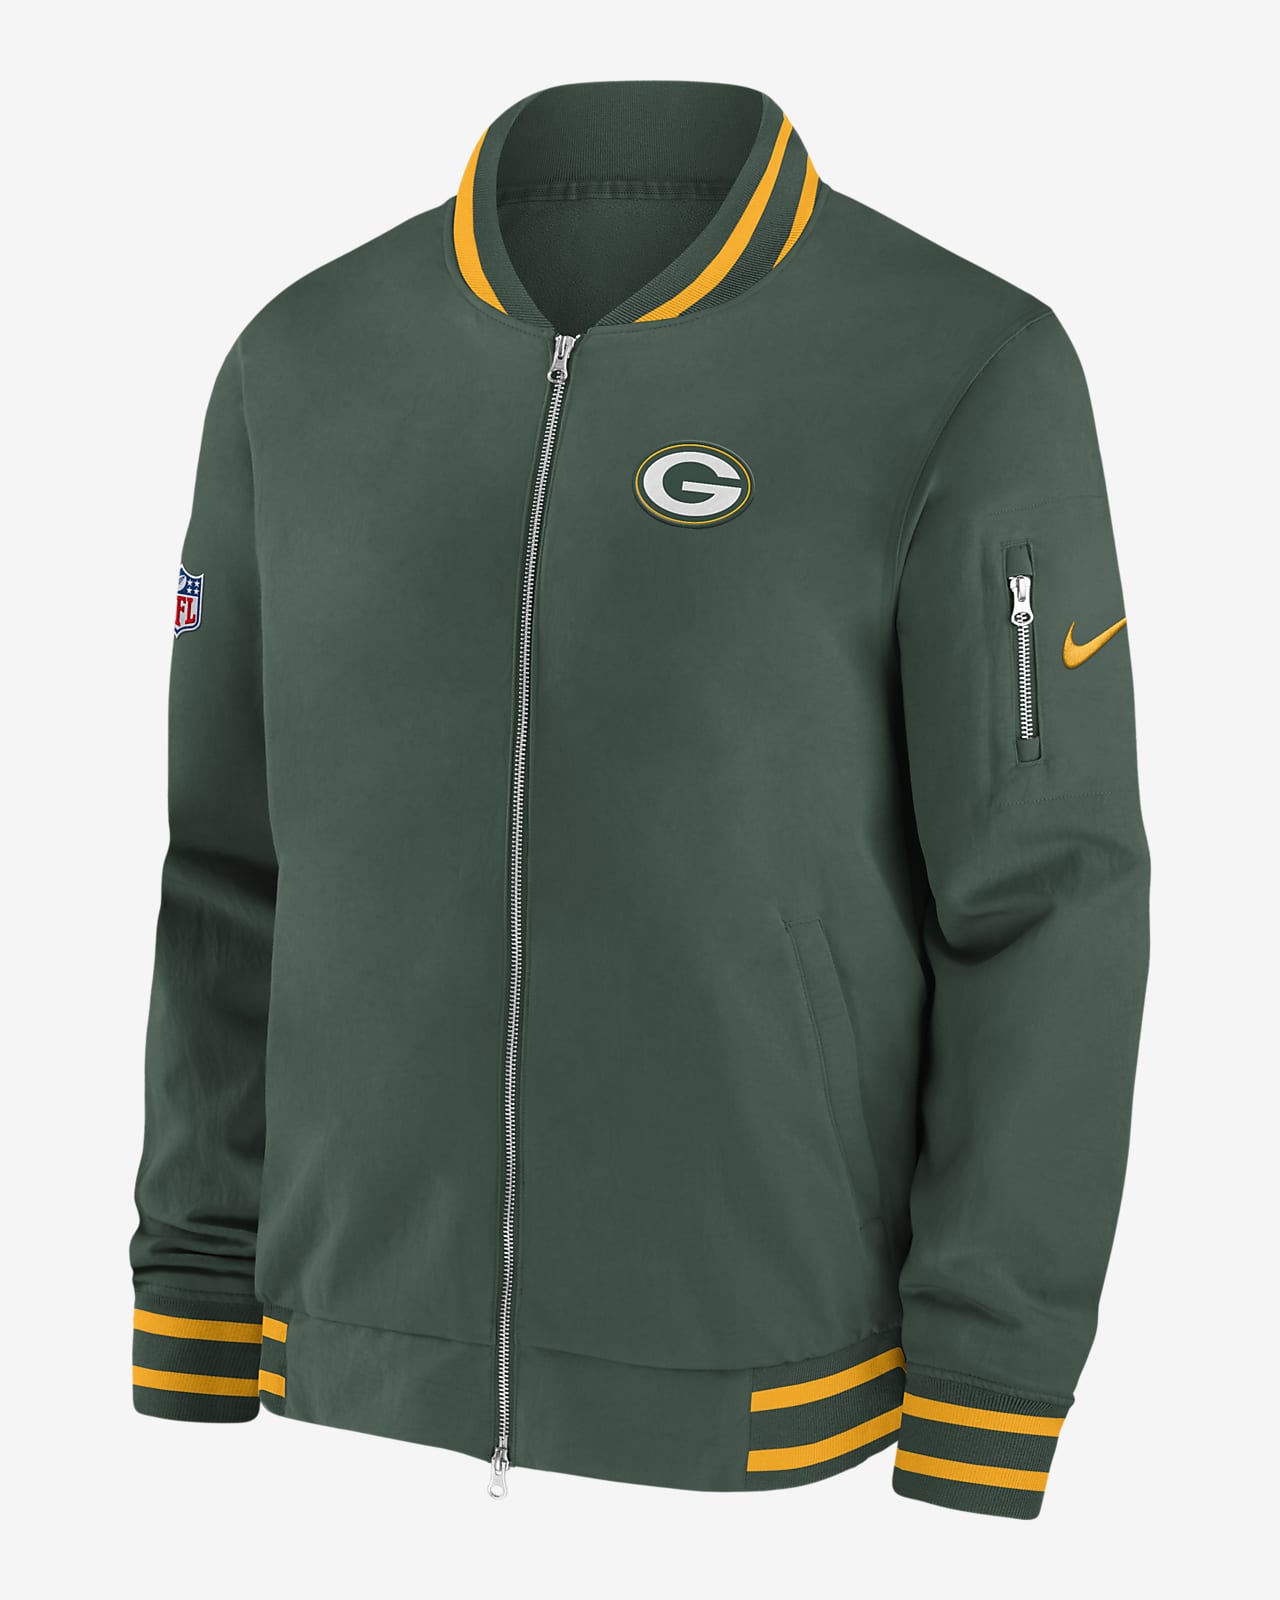 Nike Coach (NFL Green Bay Packers) Herren-Bomberjacke mit durchgehendem Reißverschluss